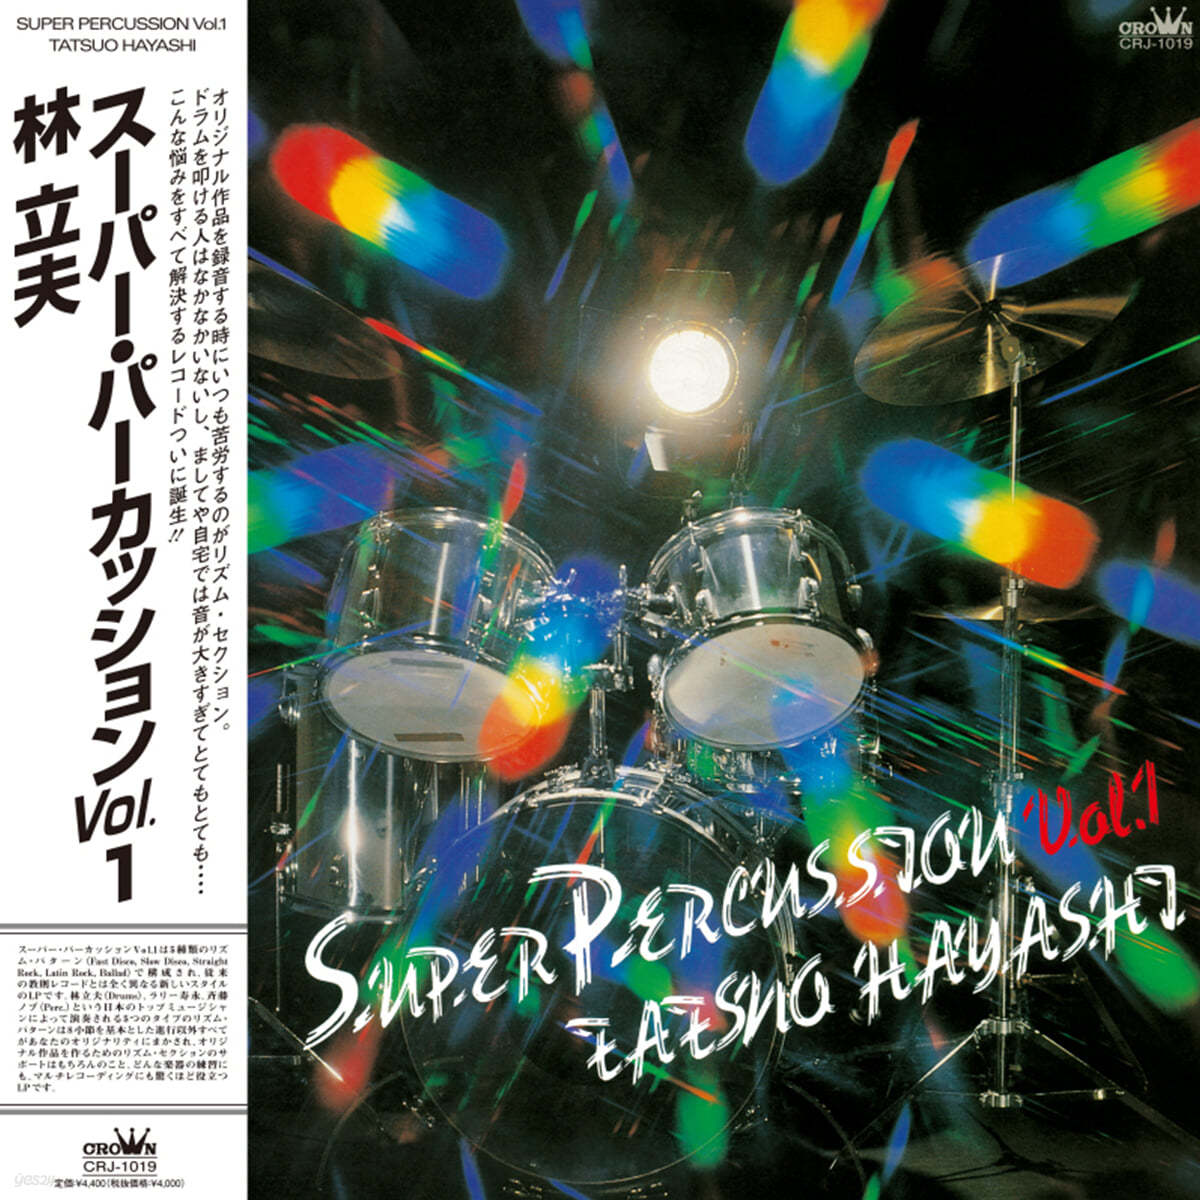 Hayashi Tatsuo (하야시 타츠오) - Super Percussion Vol.1 [LP]